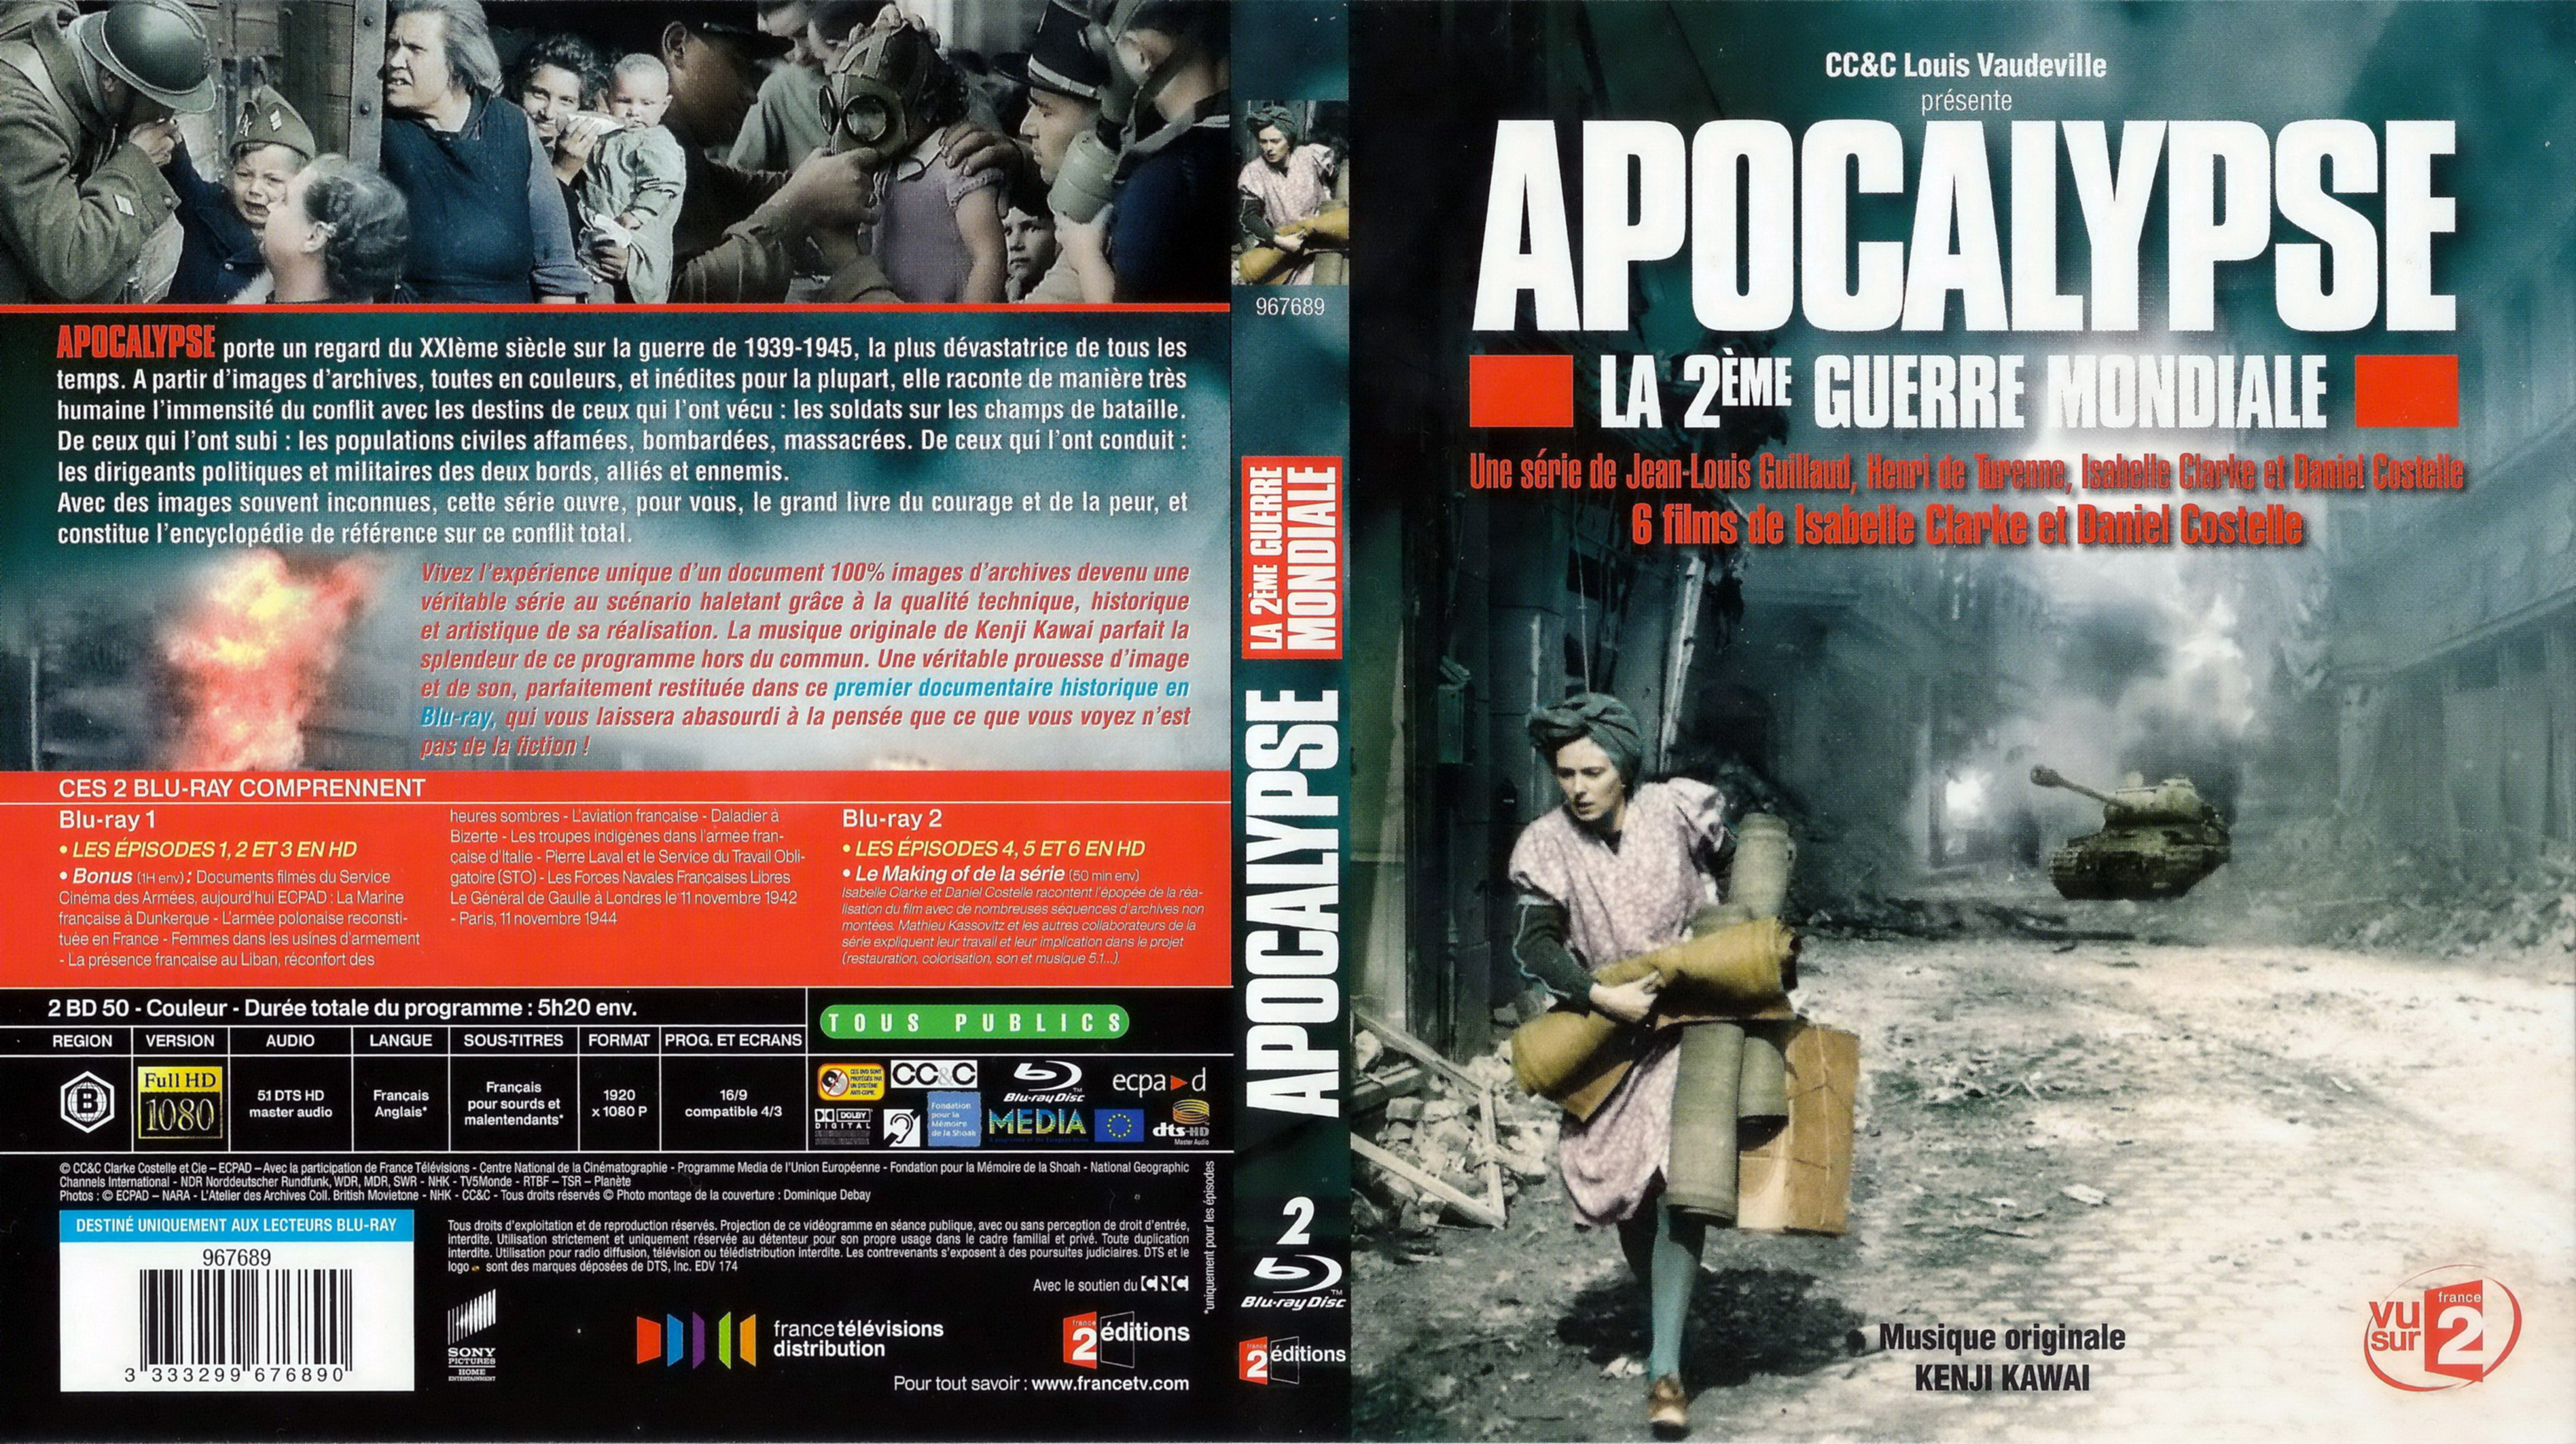 Jaquette DVD Apocalypse La 2 me guerre mondiale (BLU-RAY)